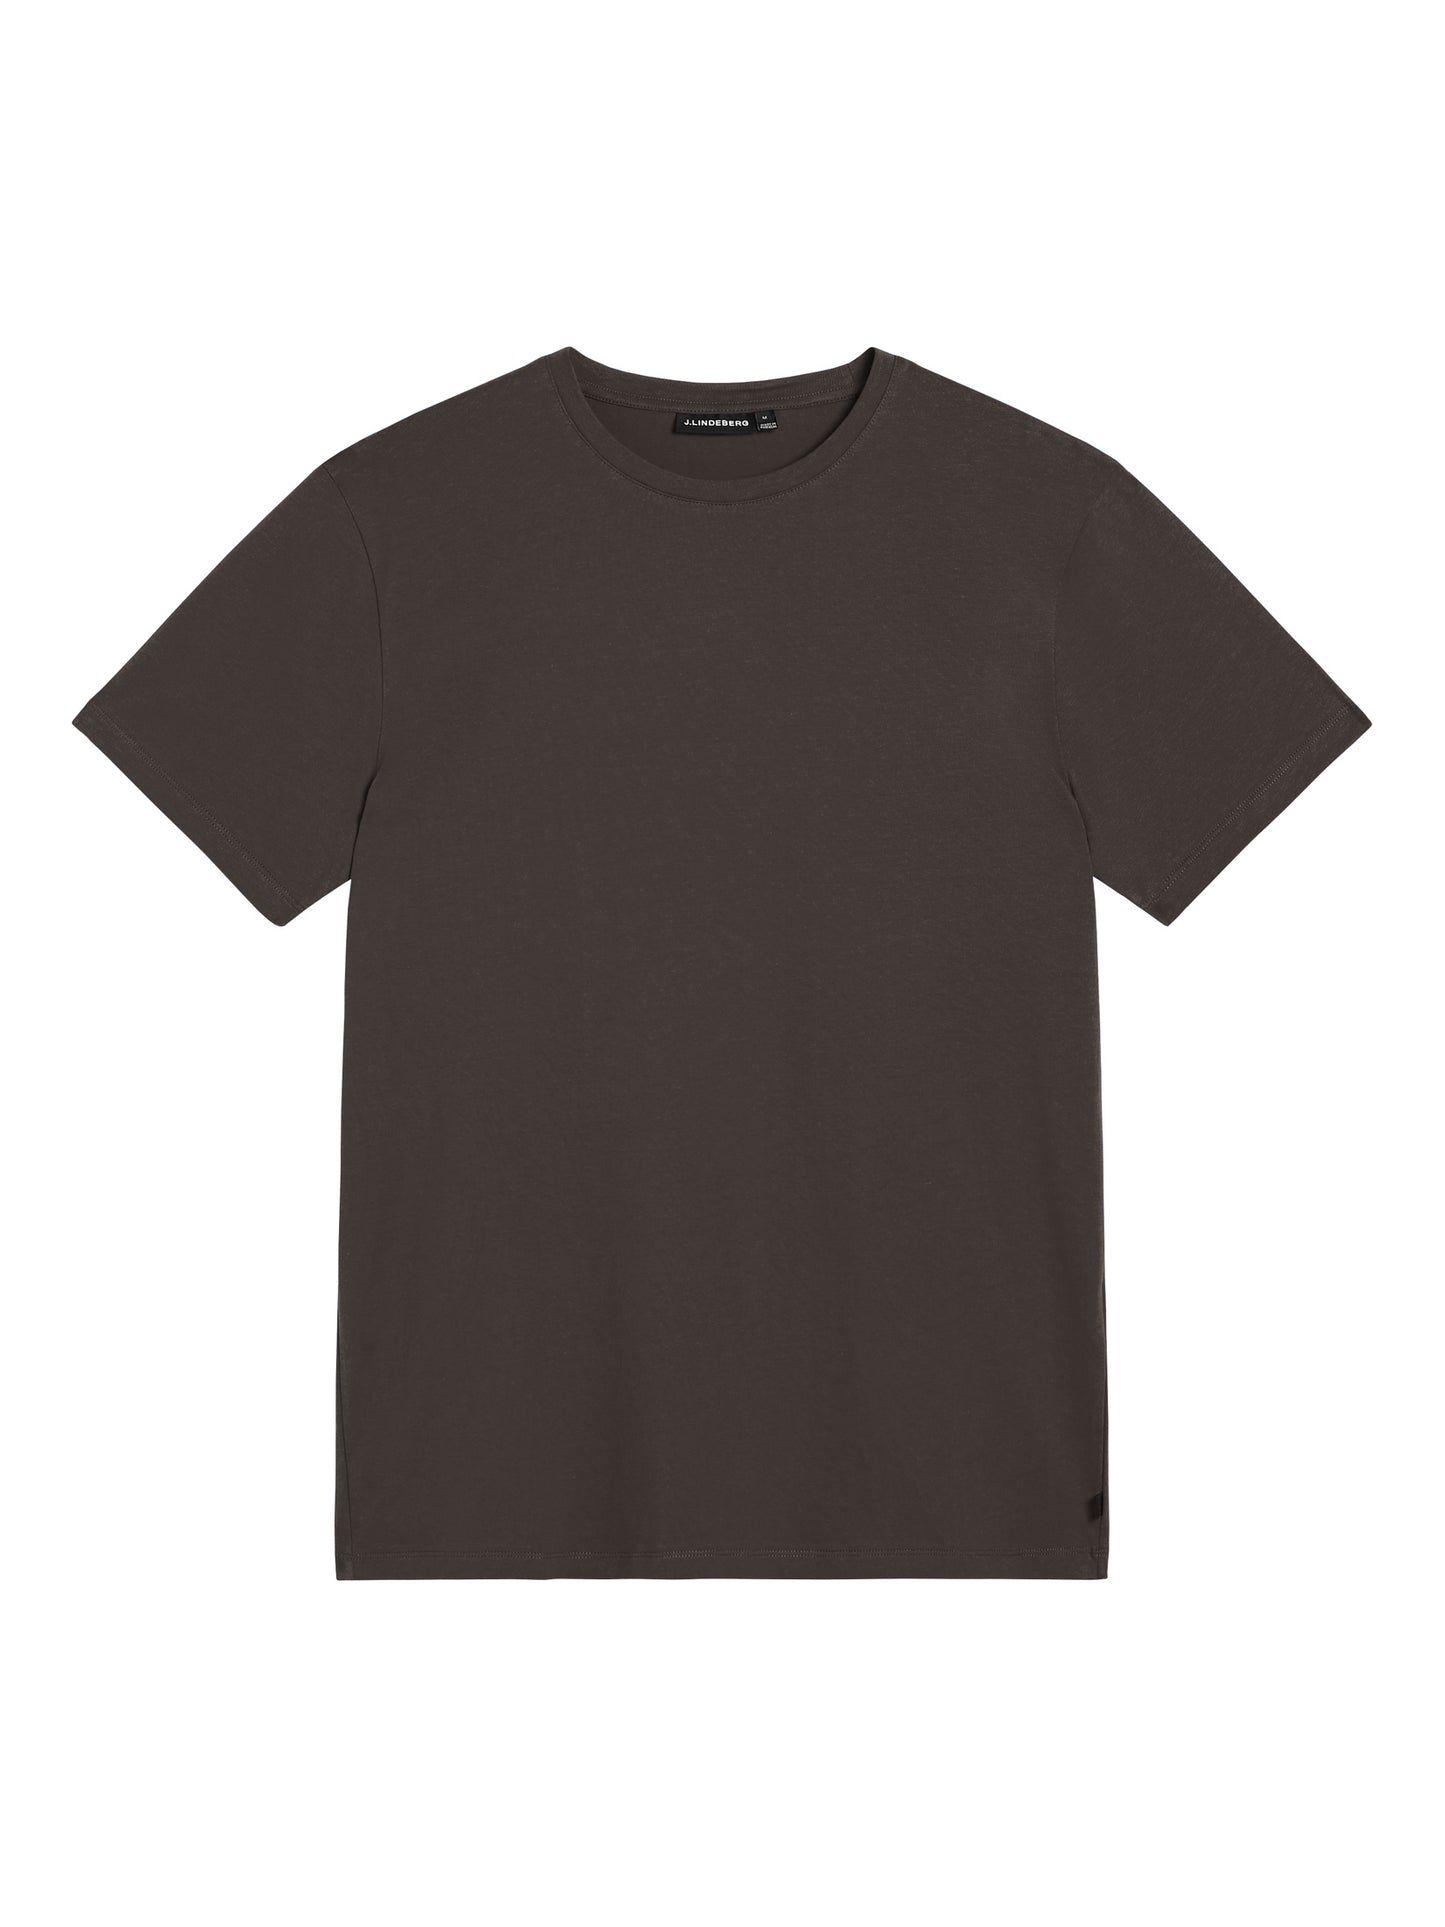 Sid Basic T-Shirt / Delicioso